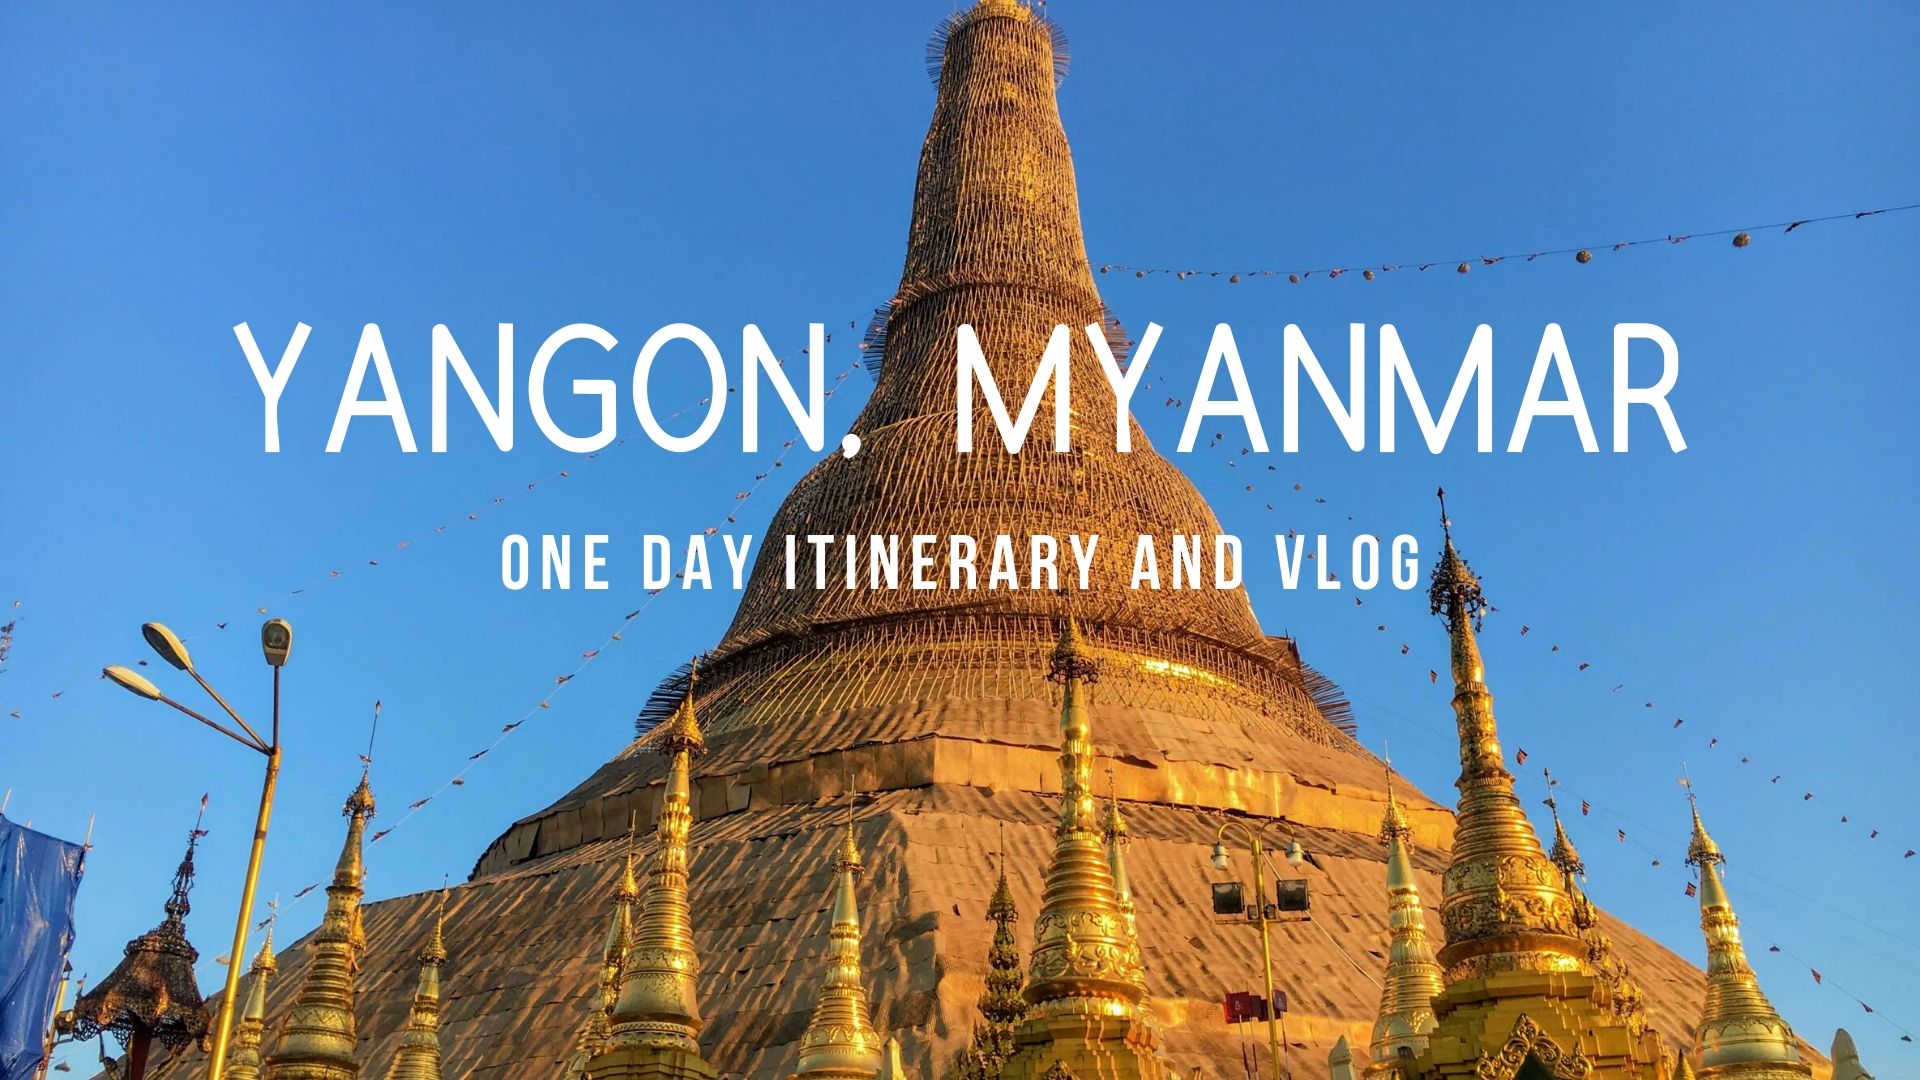 One day in Yangon itinerary, Yangon, Myanmar, Shwedagon pagoda, things to do in Yangon, what to see in Yangon, Yangon airport to city cover